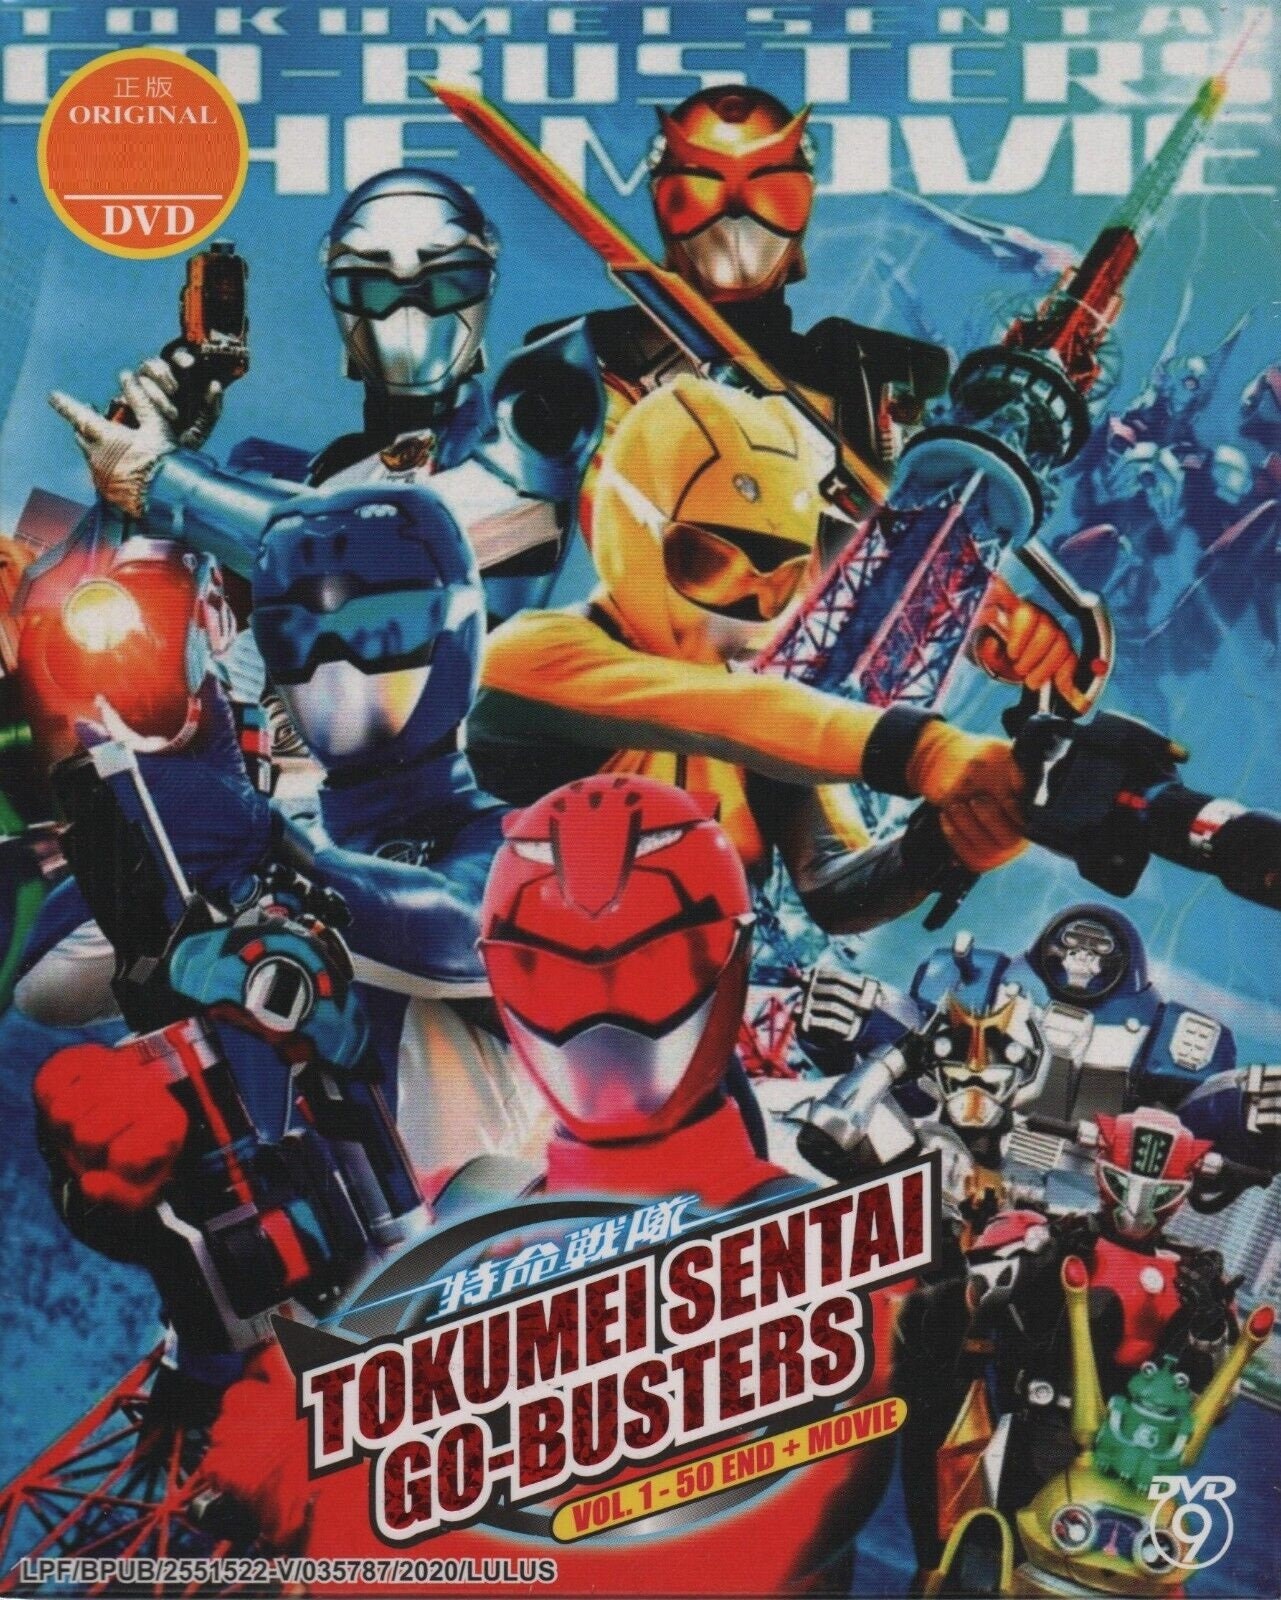 DVD Anime Power Rangers Tensou Sentai Goseiger TV Series Vol 1-50+